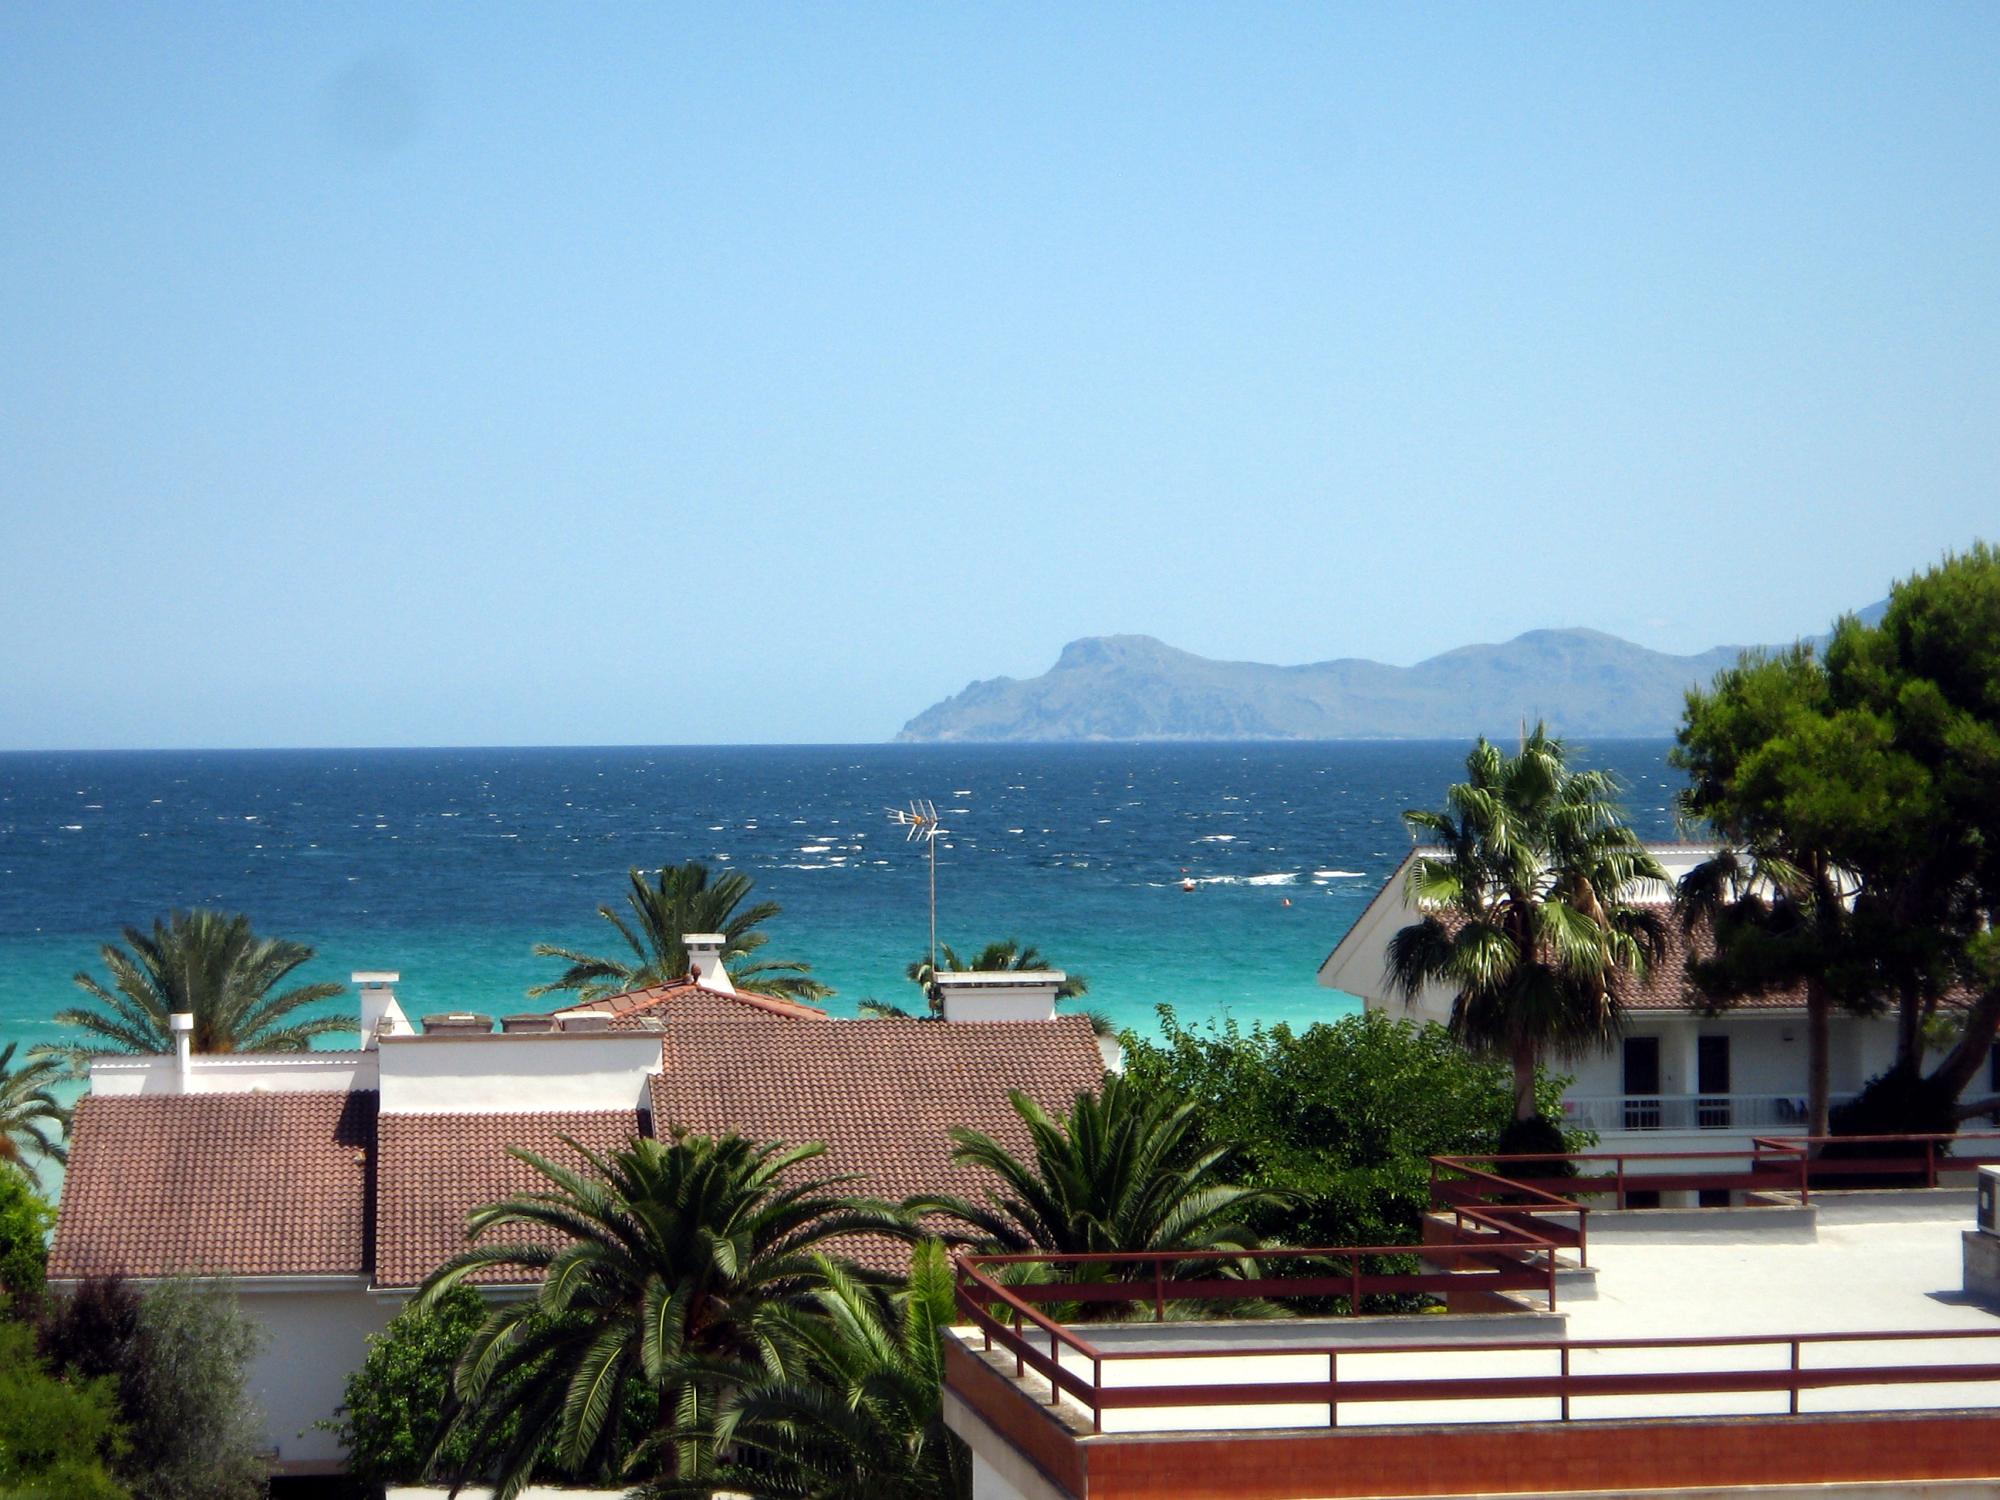 Balearic Islands - Room View #2